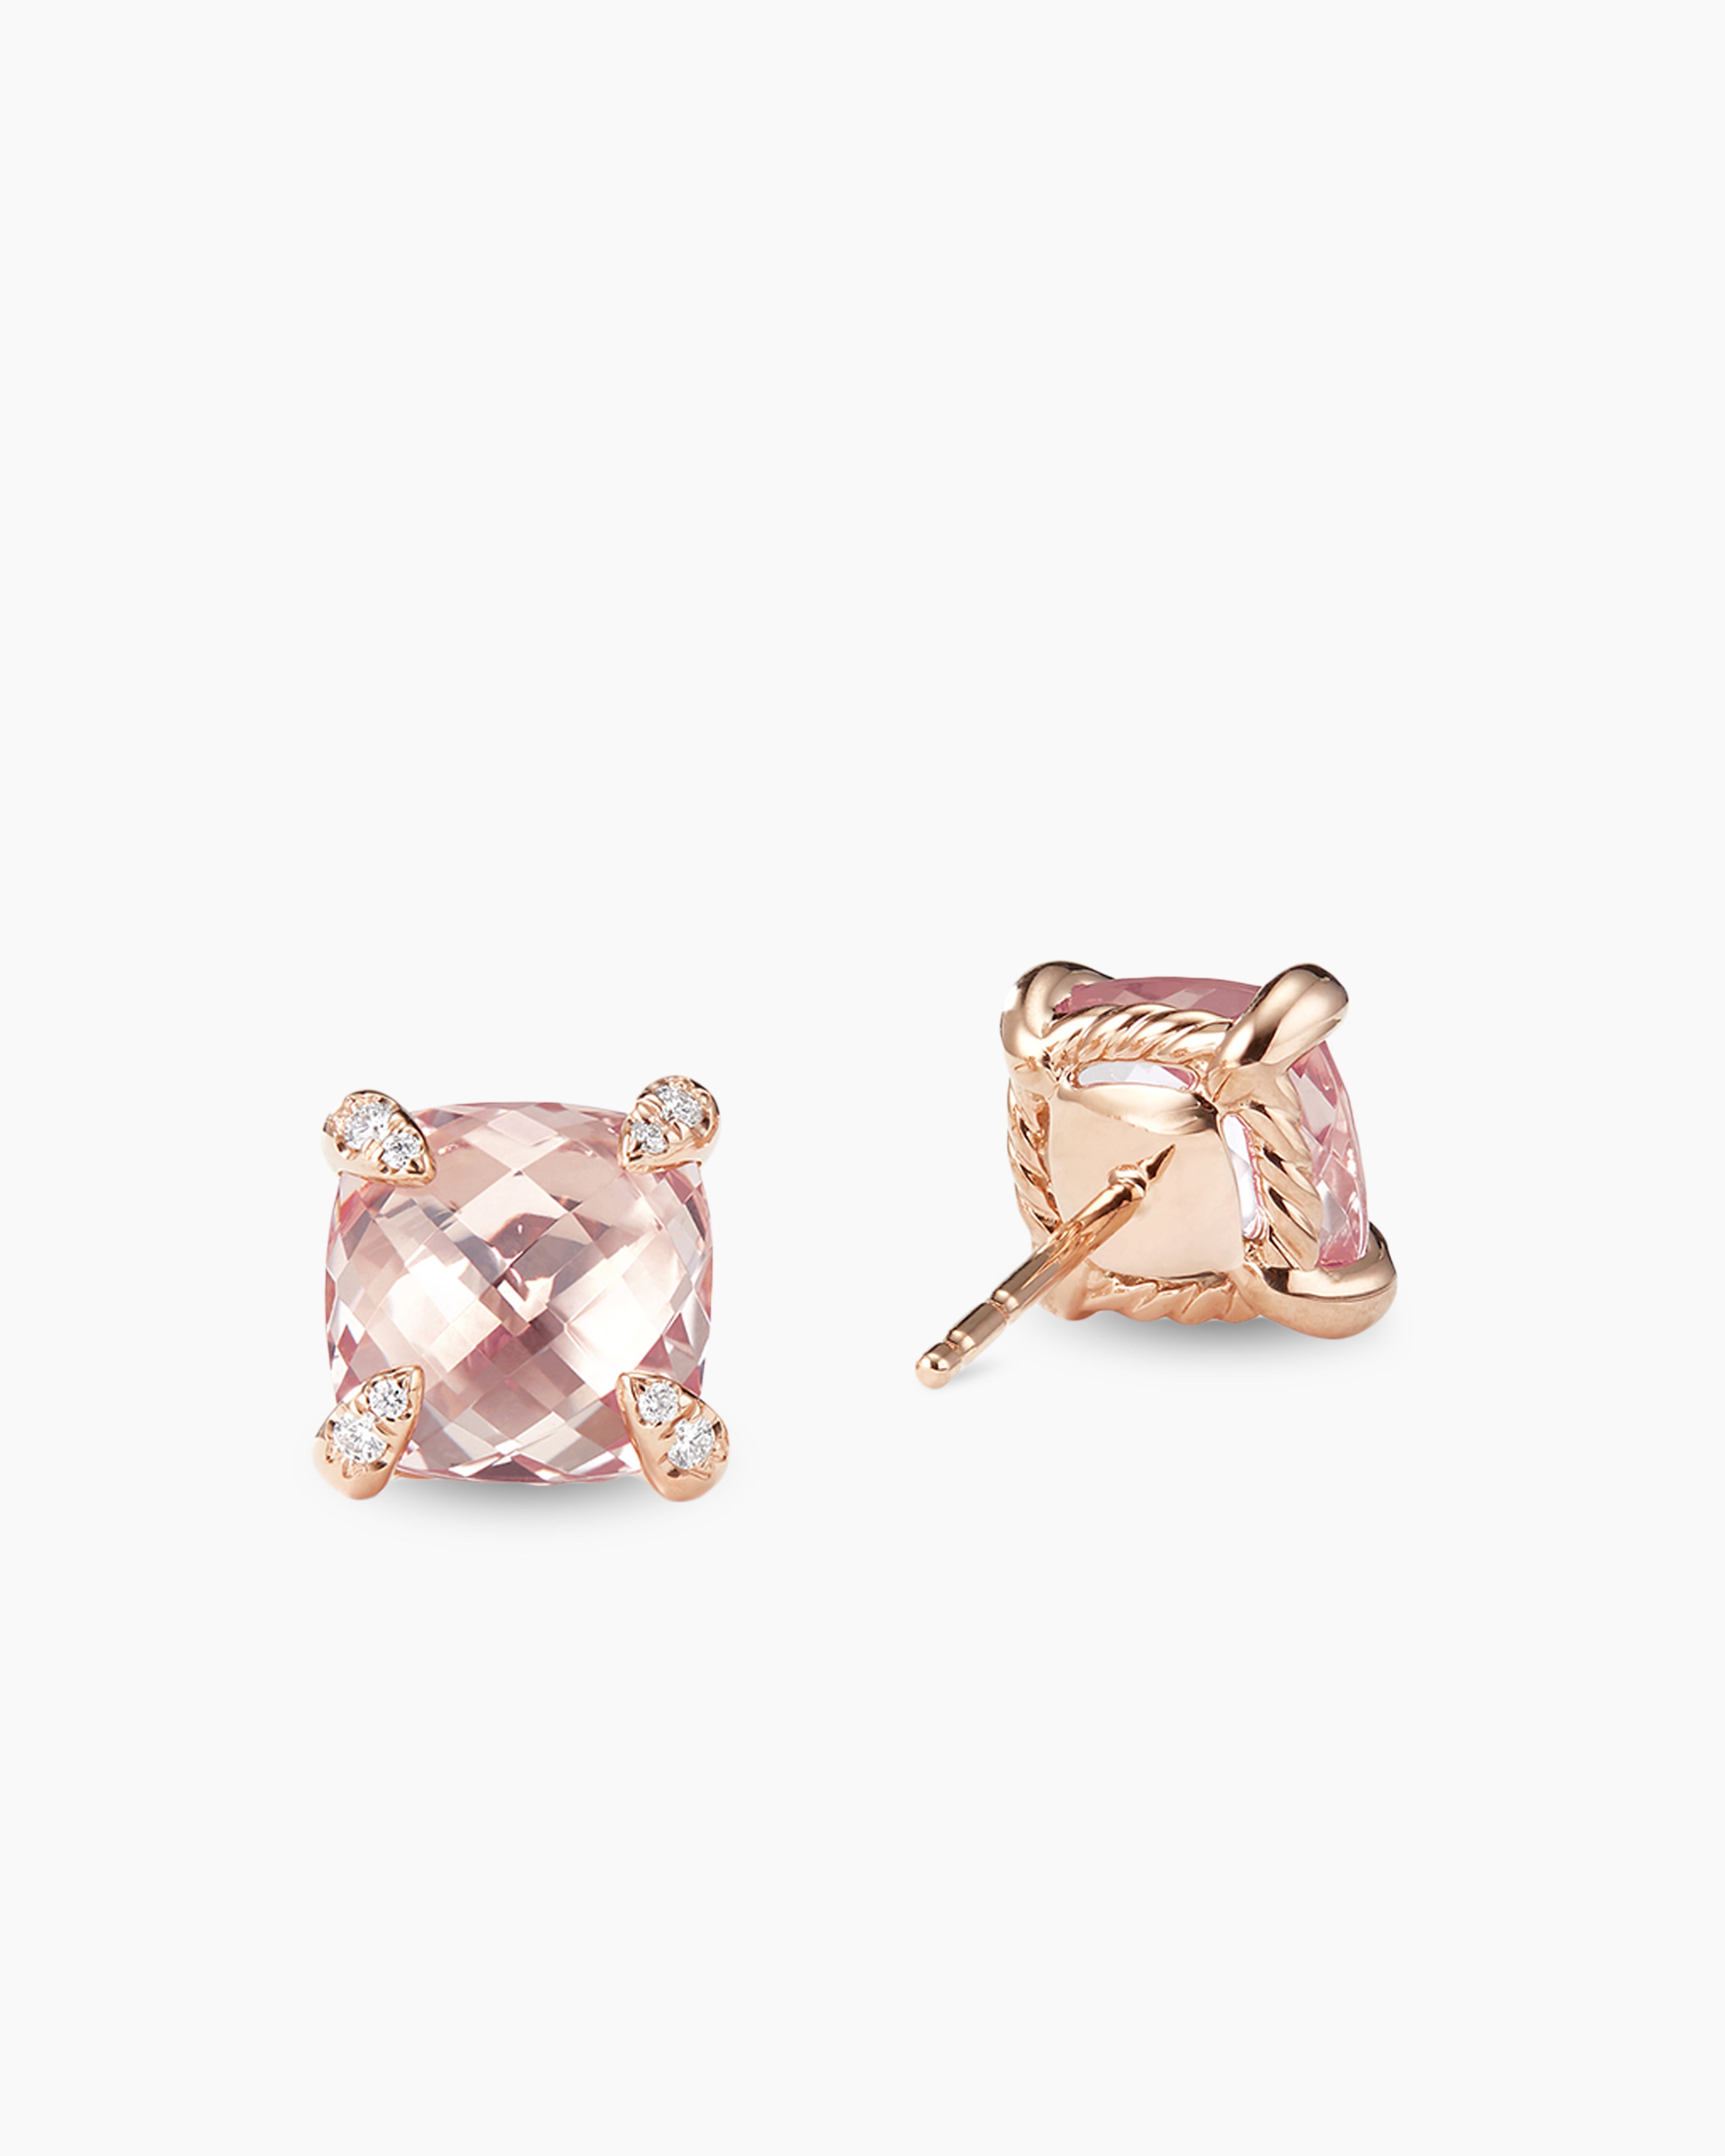 David Yurman Chatelaine Stud Earrings with Morganite & Diamonds in 18K Rose Gold